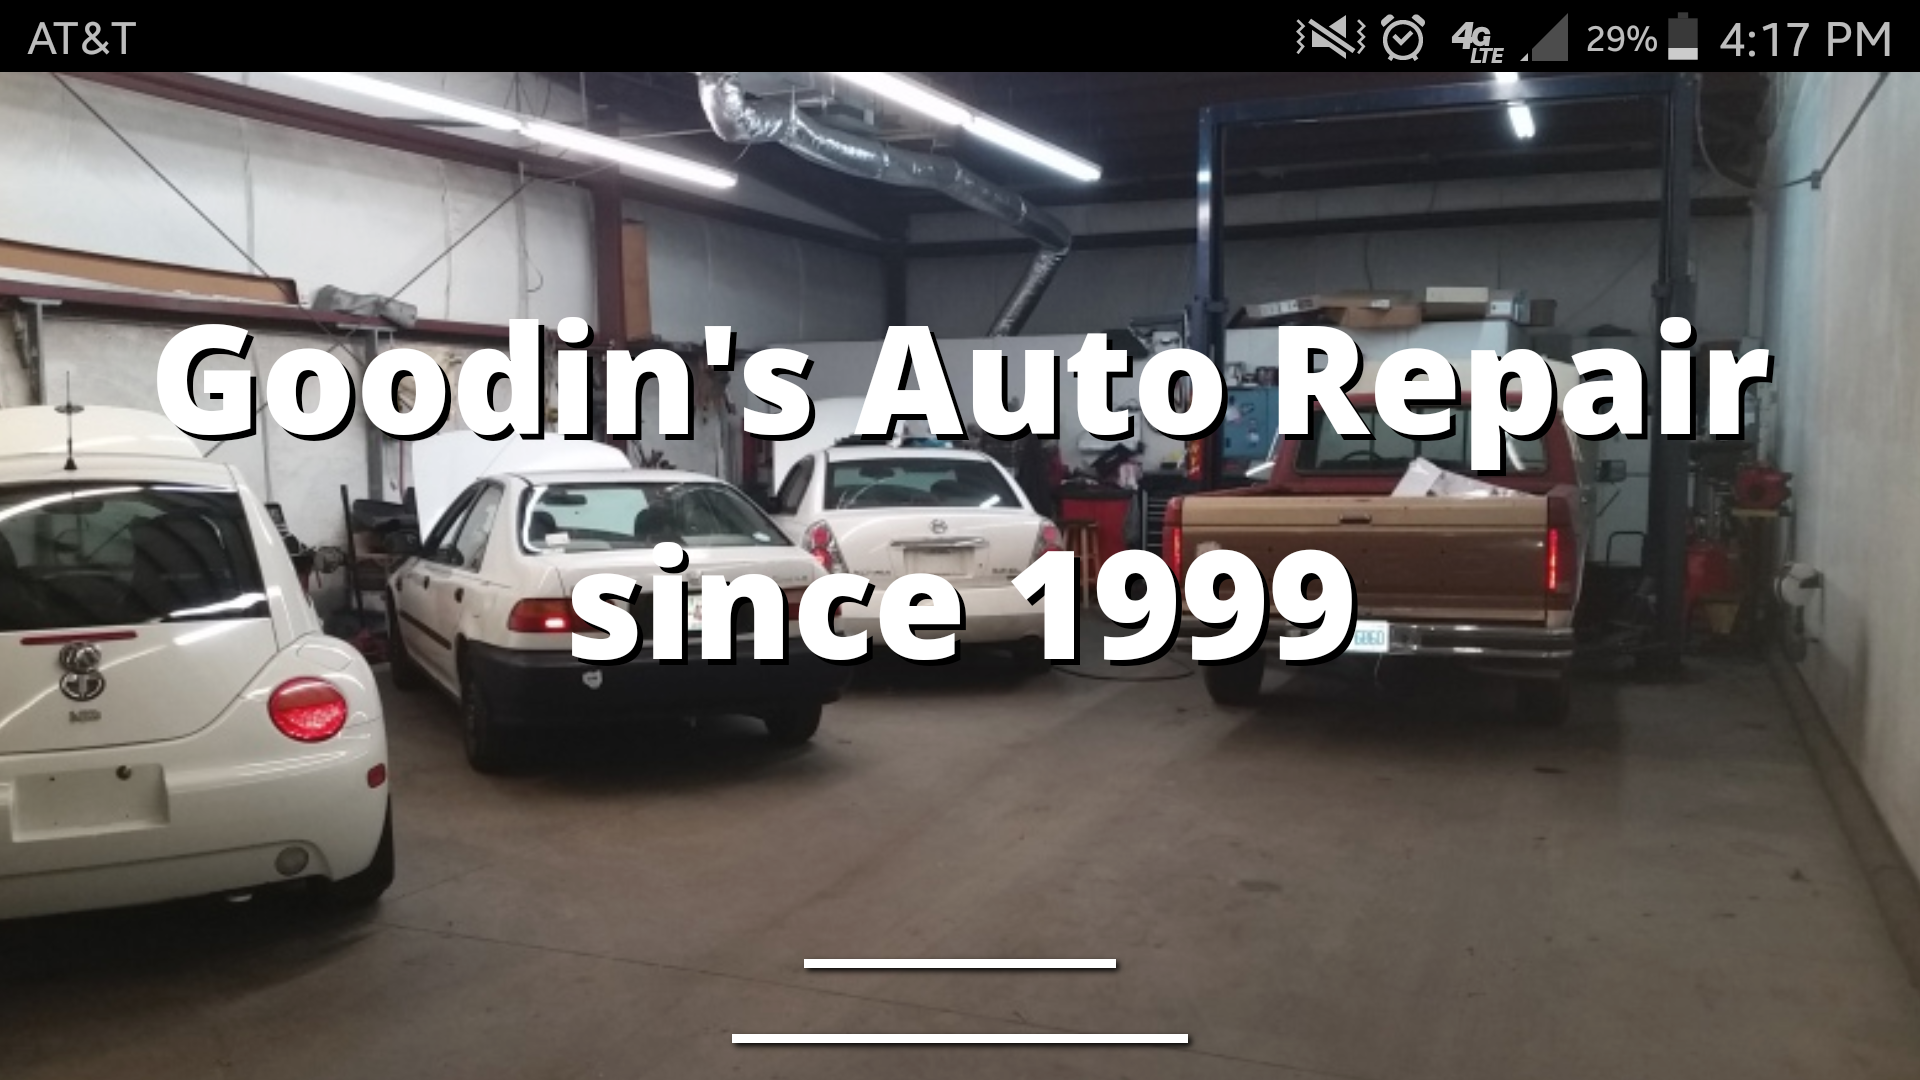 Goodin's Auto Repair